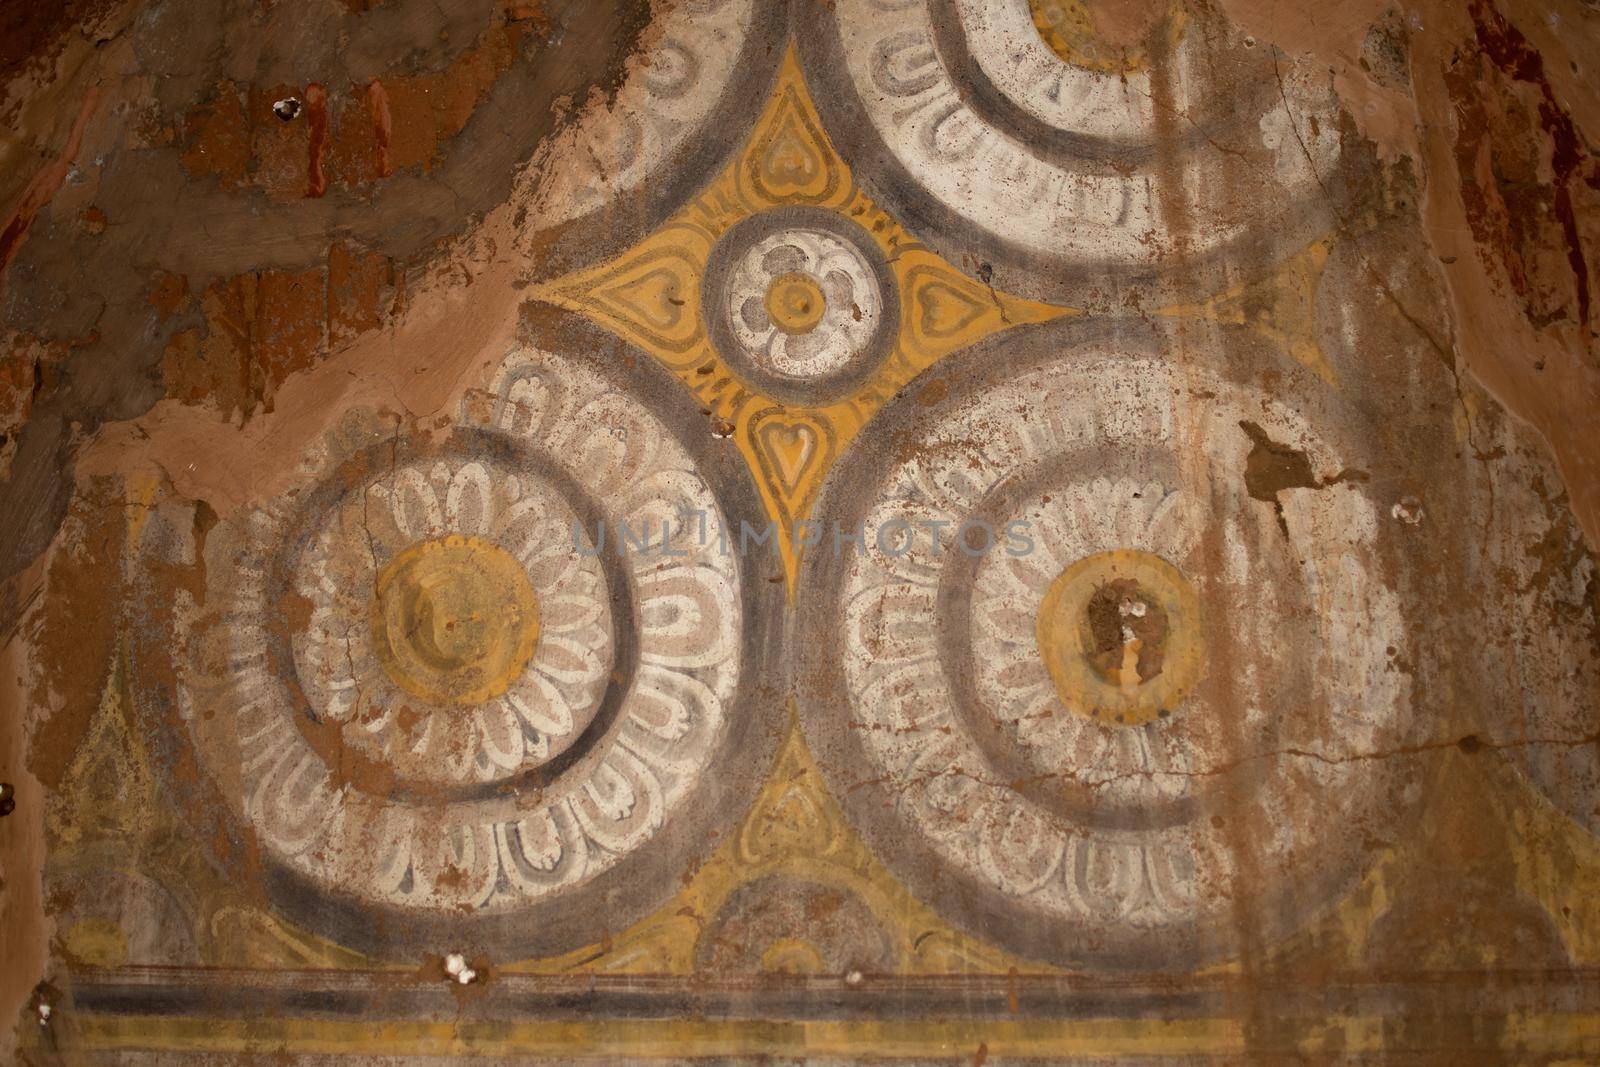 BAGAN, NYAUNG-U, MYANMAR - 2 JANUARY 2020: Historical wall paintings and drawings inside a pagoda temple in Pagan